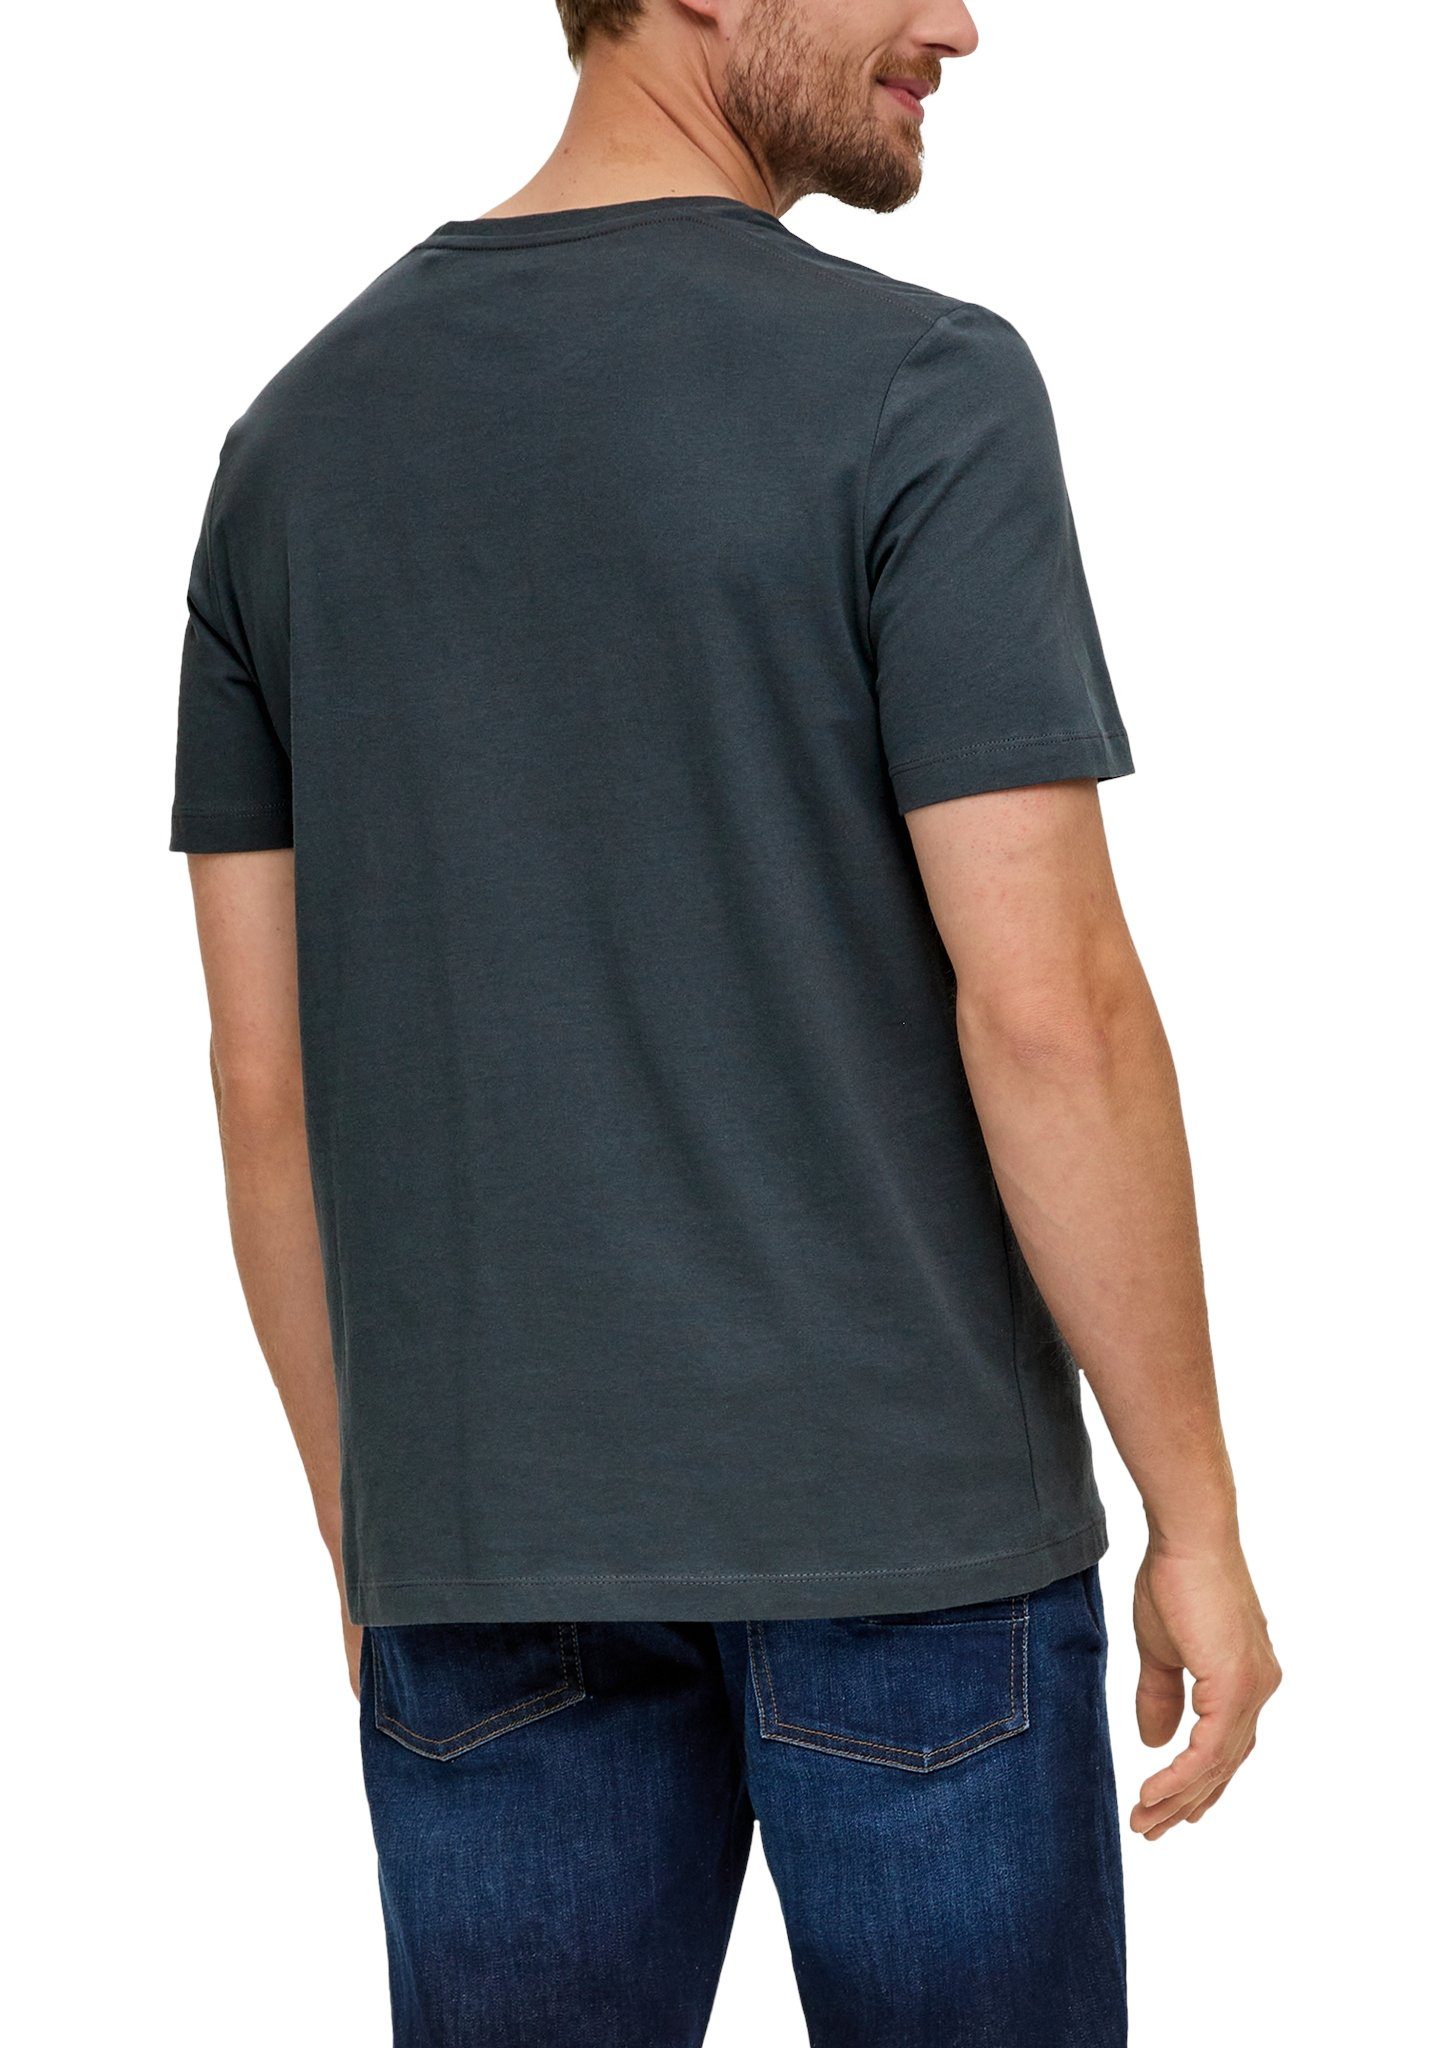 s.Oliver T-Shirt im dark sportiven Look grey